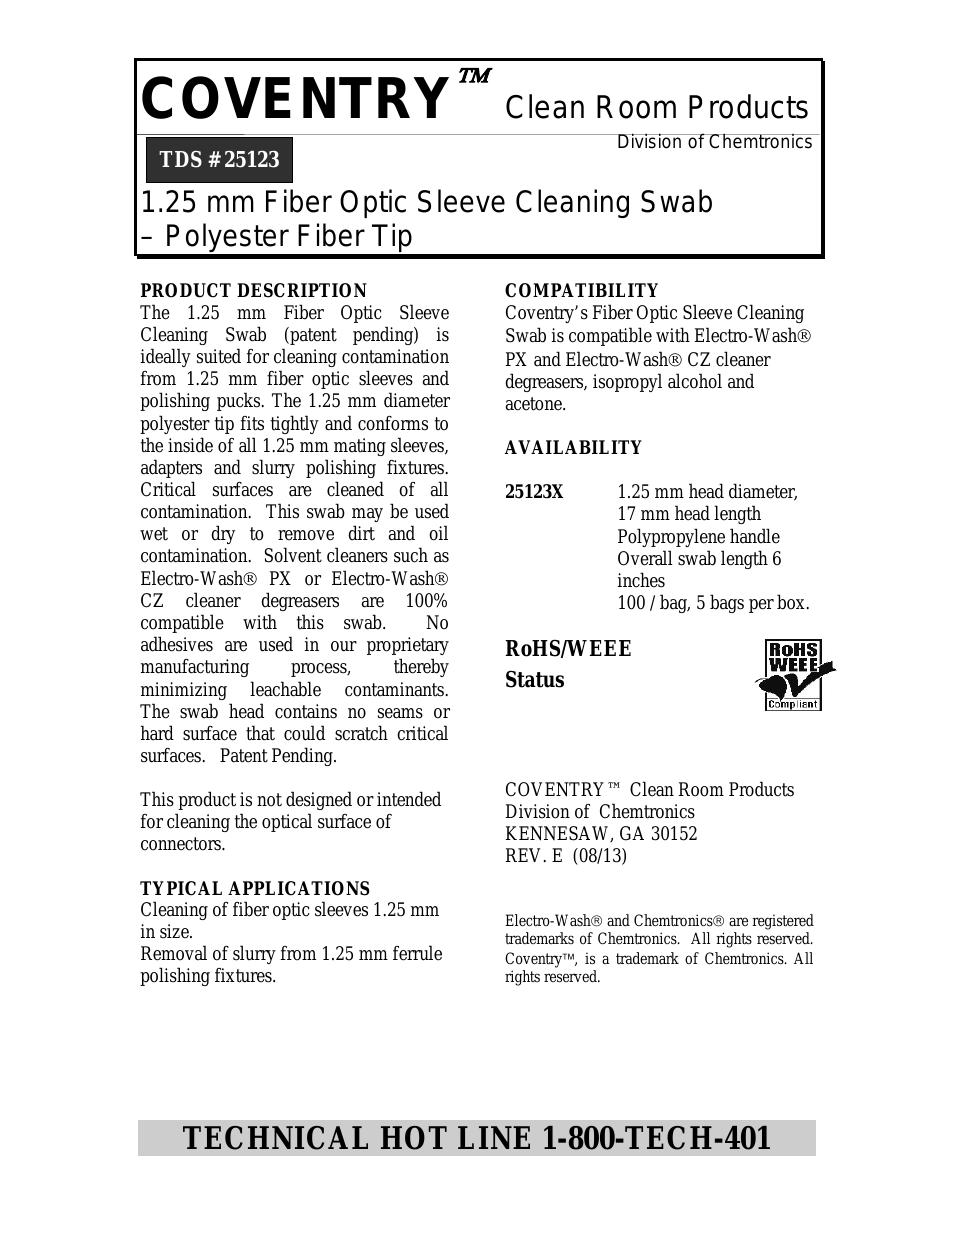 1.25mm Fiber Optic Sleeve Cleaning Swab 26122F